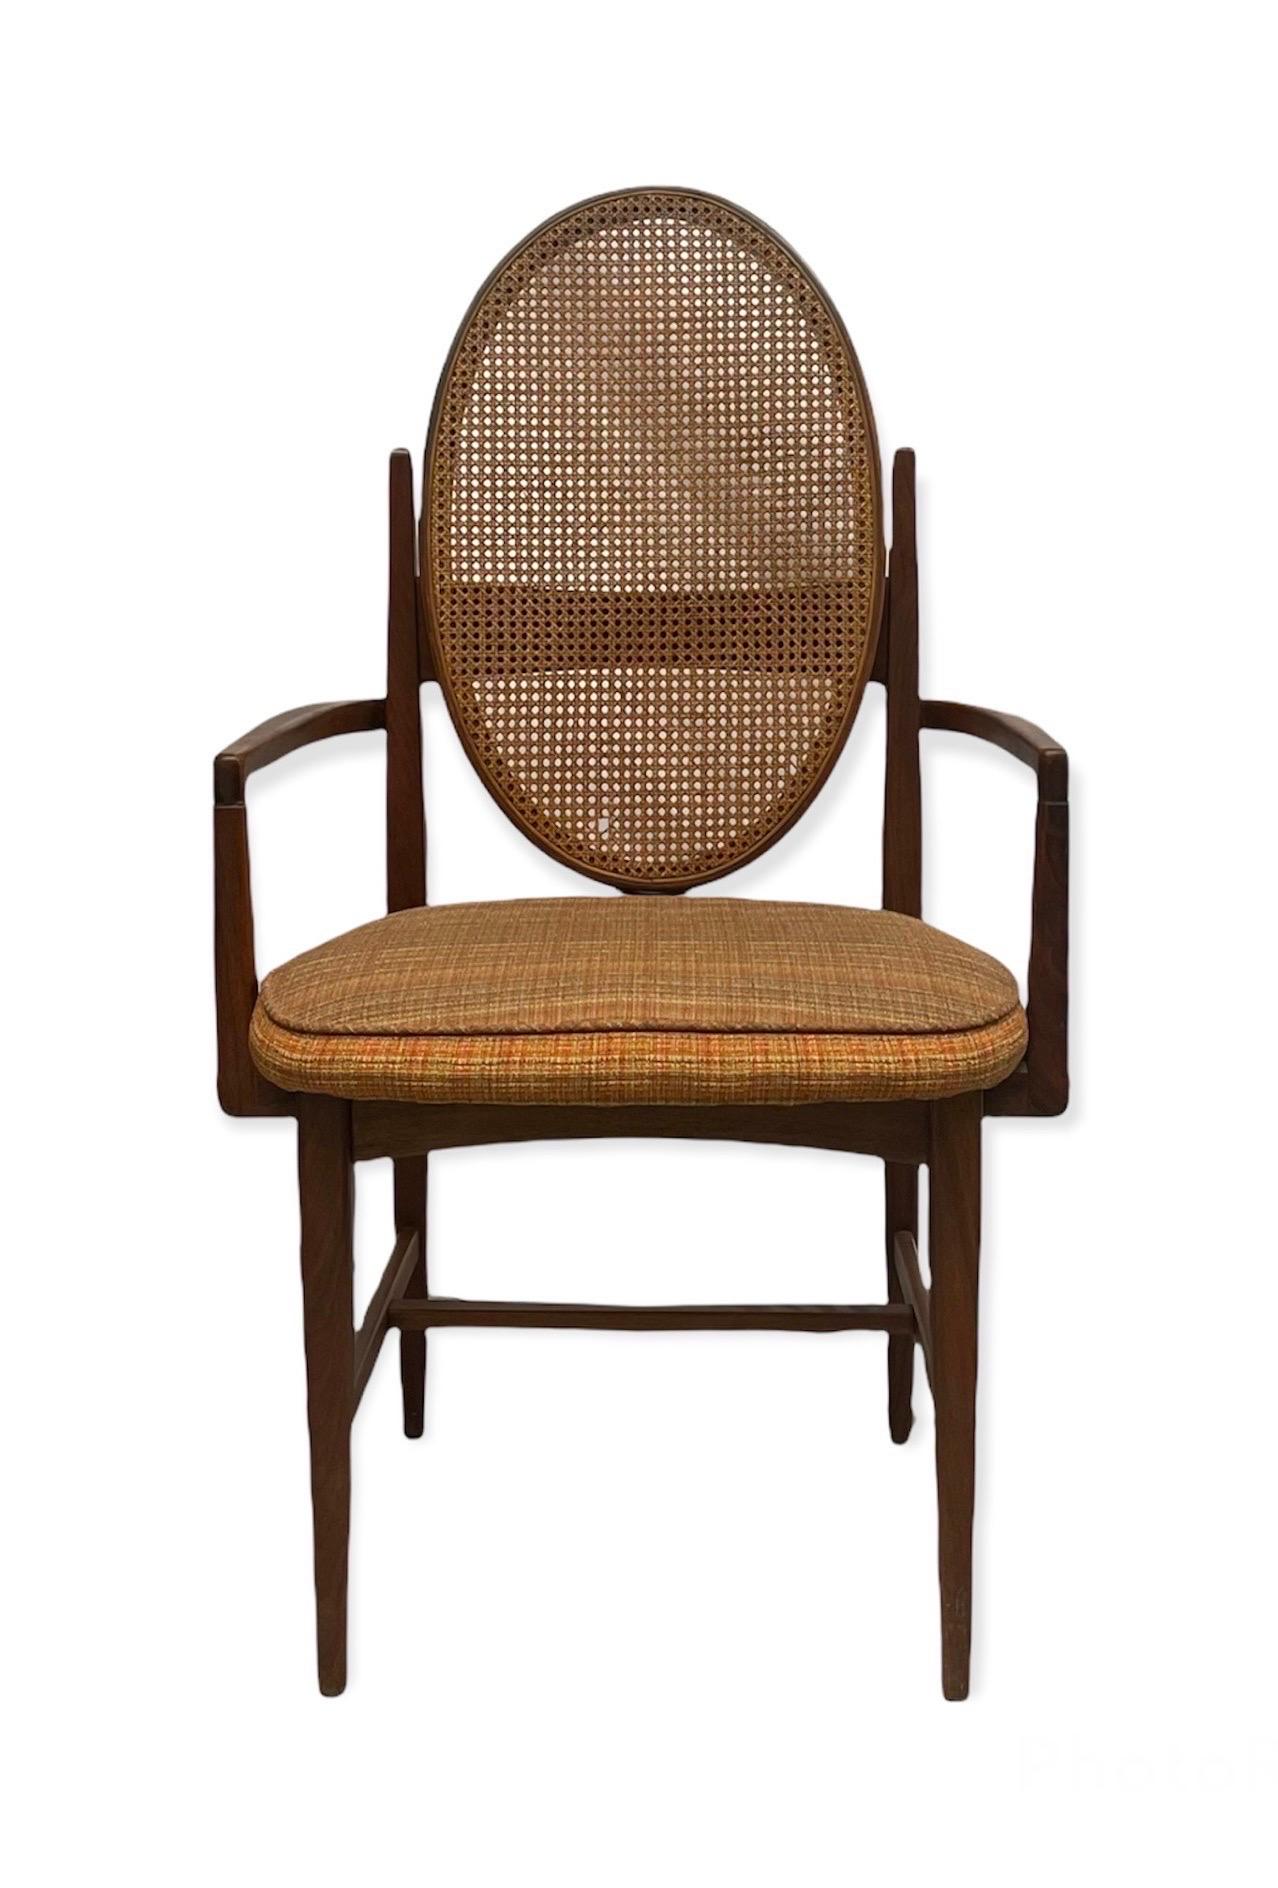 Vintage Mid-Century Modern Arm Chair. 

Dimensions. 23 w ; 20 d ; 41 h.